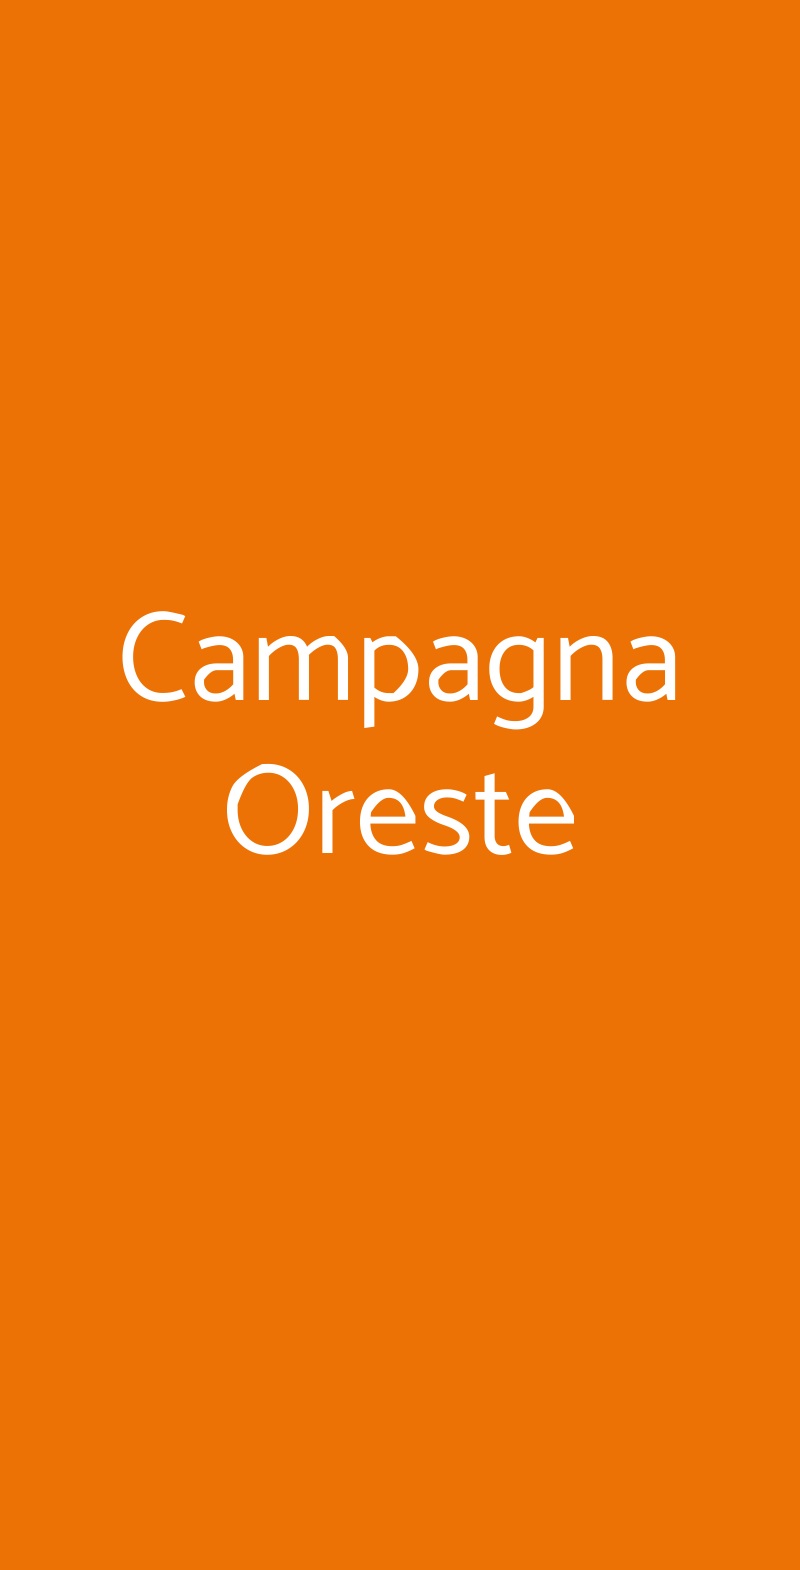 Campagna Oreste Calenzano menù 1 pagina